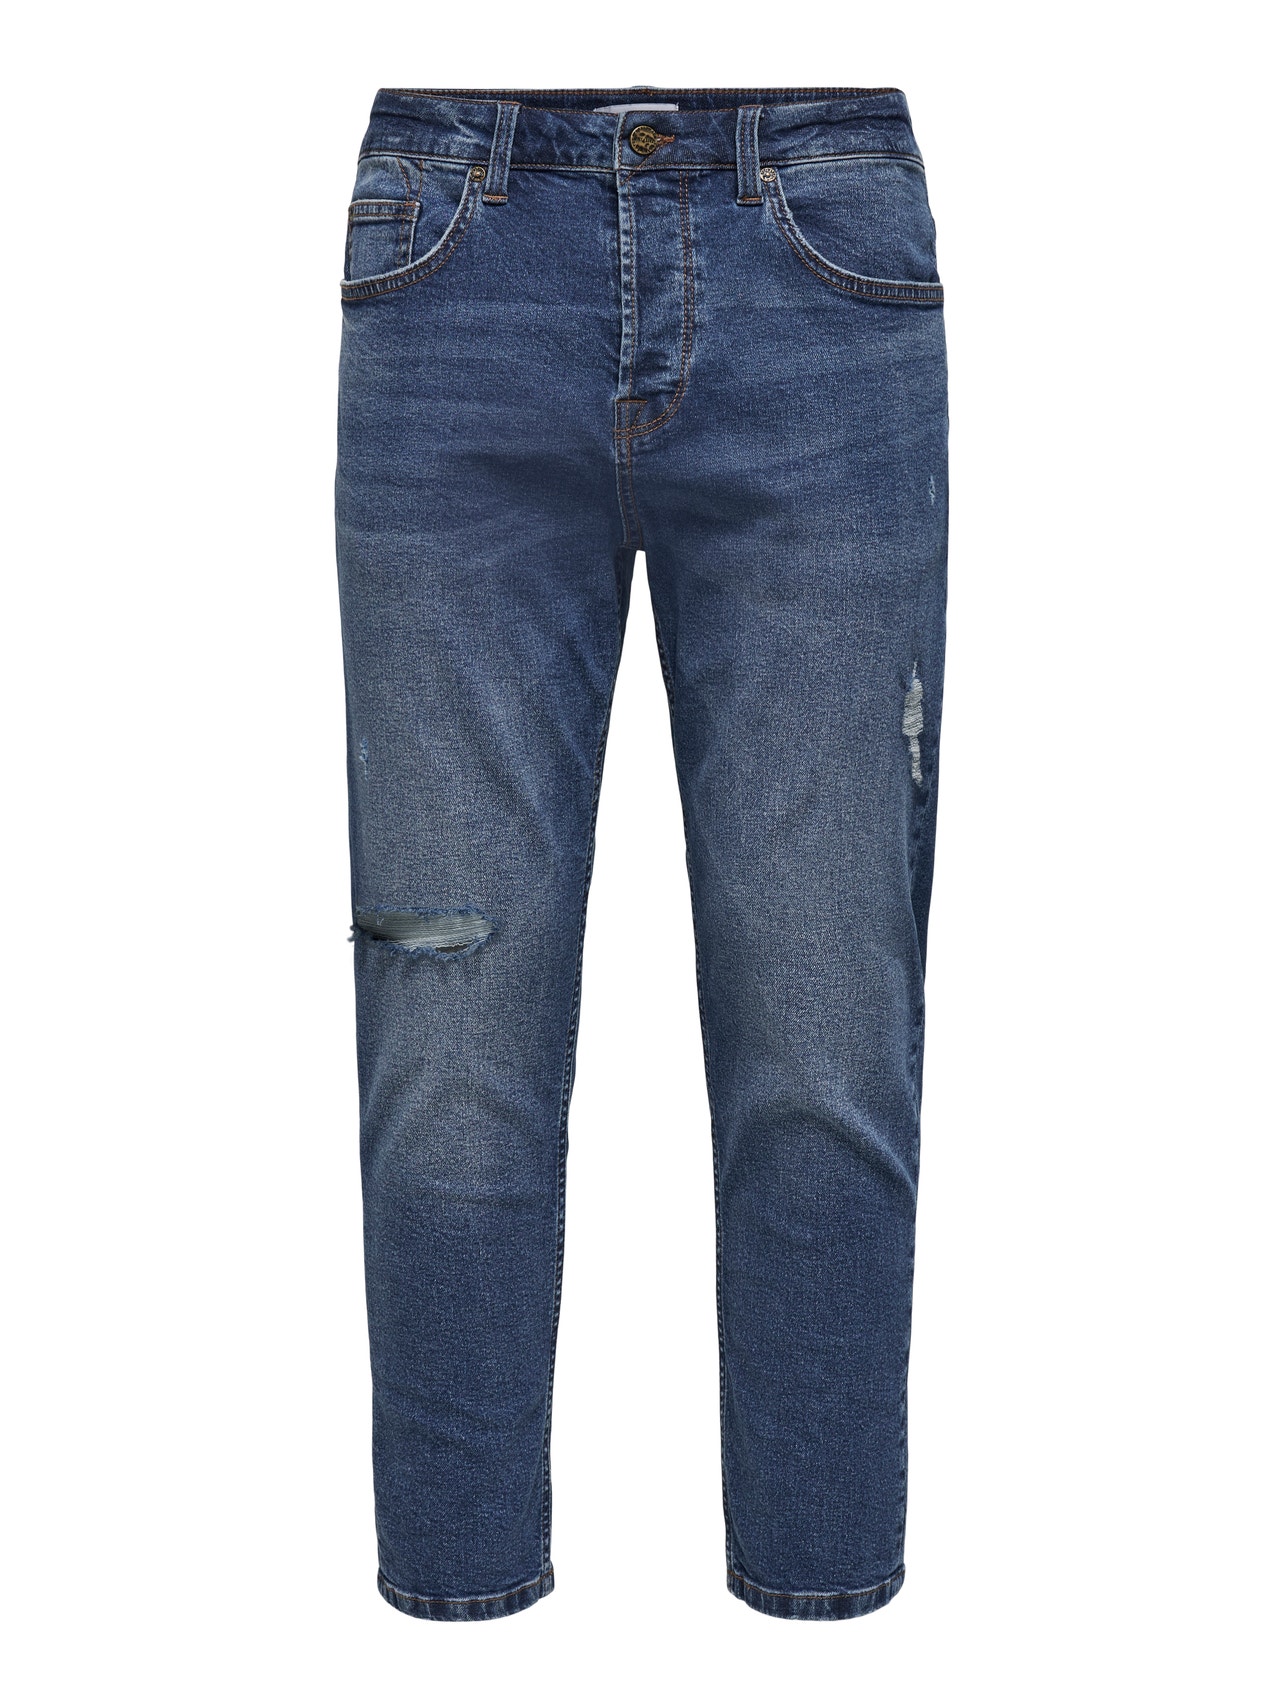 ONLY & SONS Jeans Tapered Fit Ourlé destroy -Blue Denim - 22022104